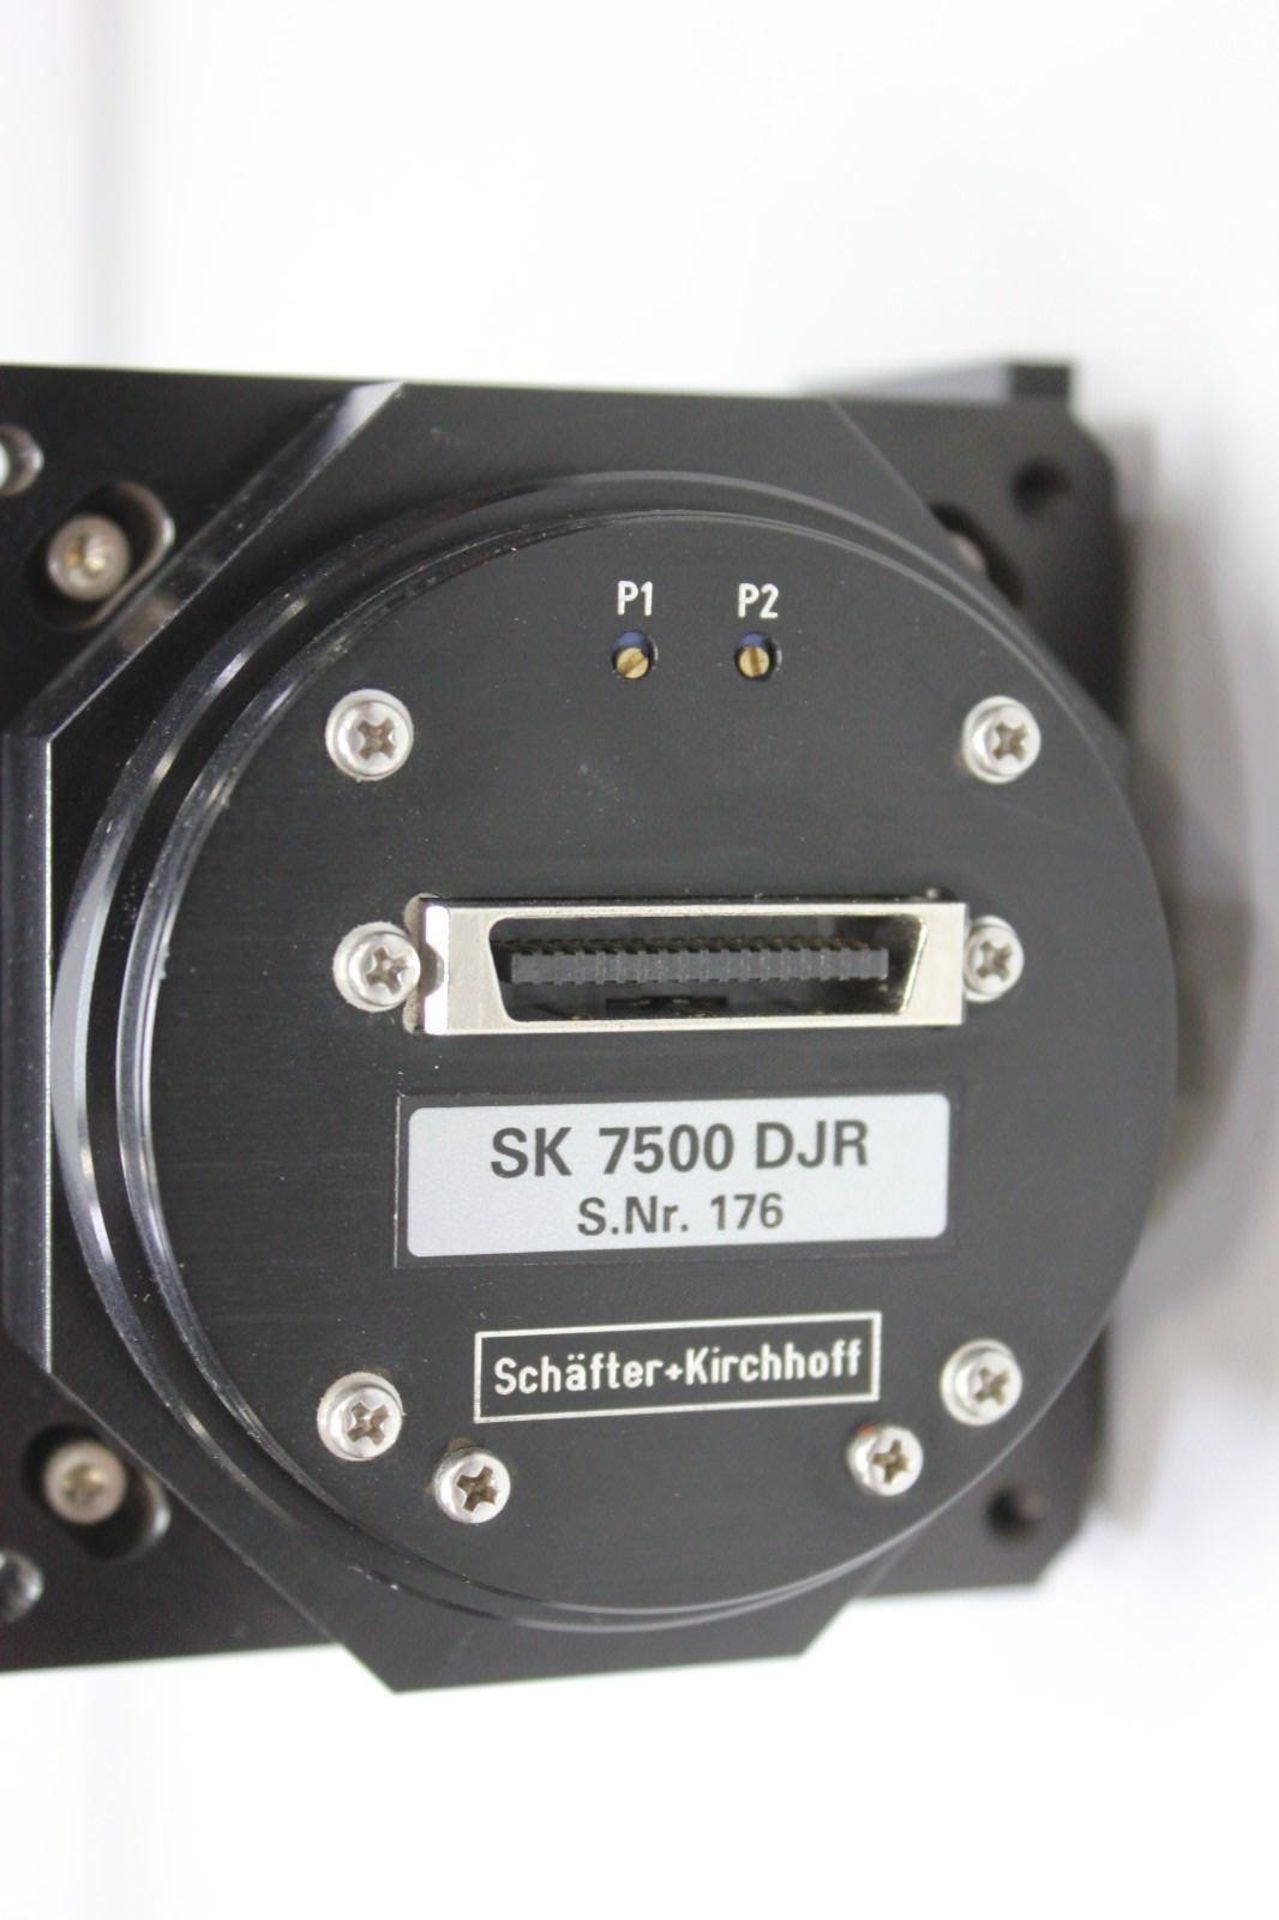 Schafter & Kirchhoff Digital Line Scan Camera With Rodenstock Lens - Image 2 of 5